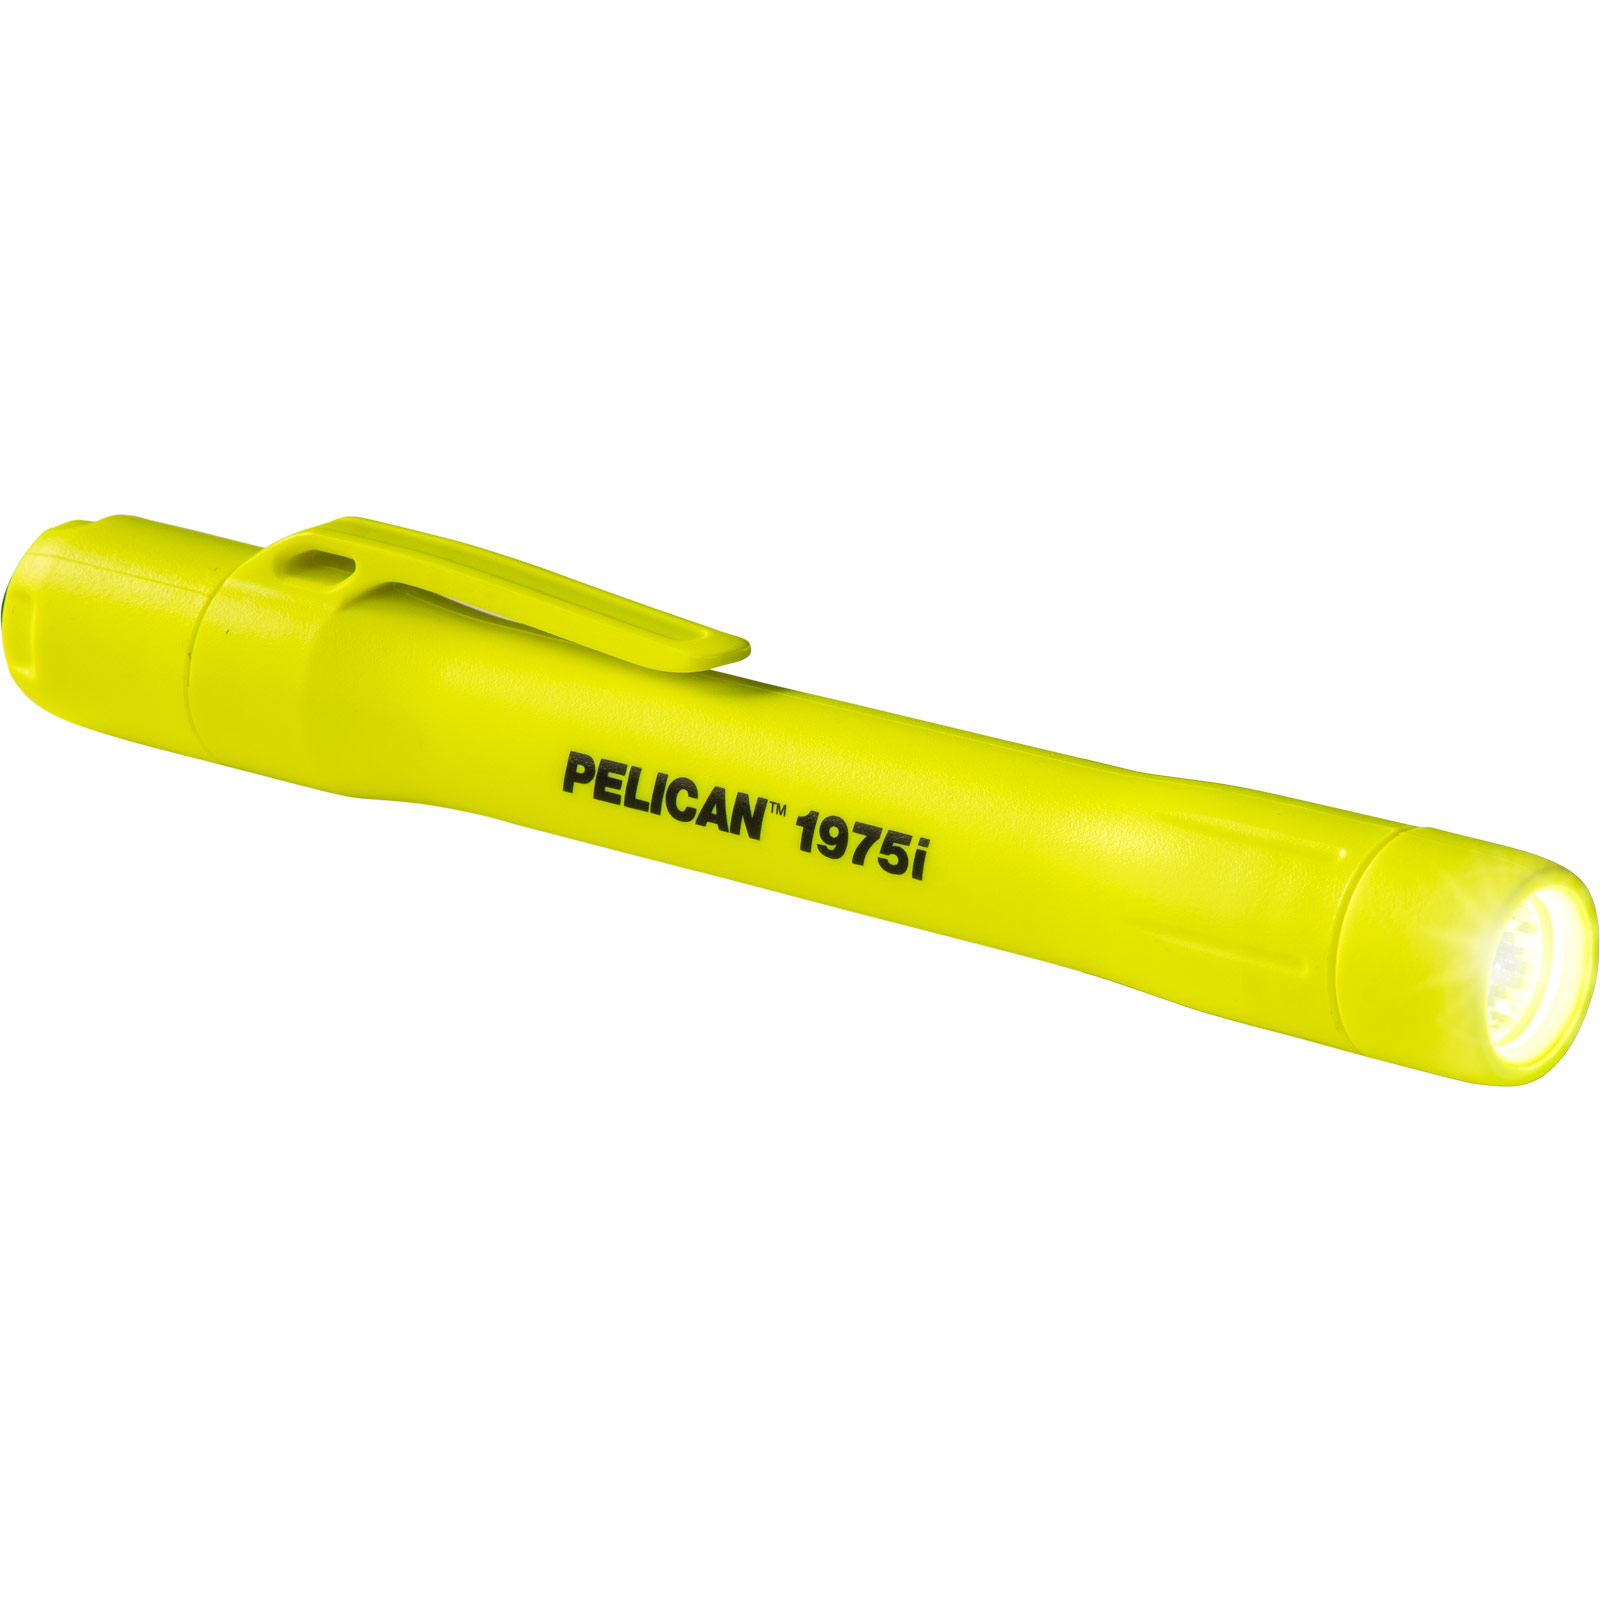 Pelican 1975i Safety Certified Penlight - 2AAA